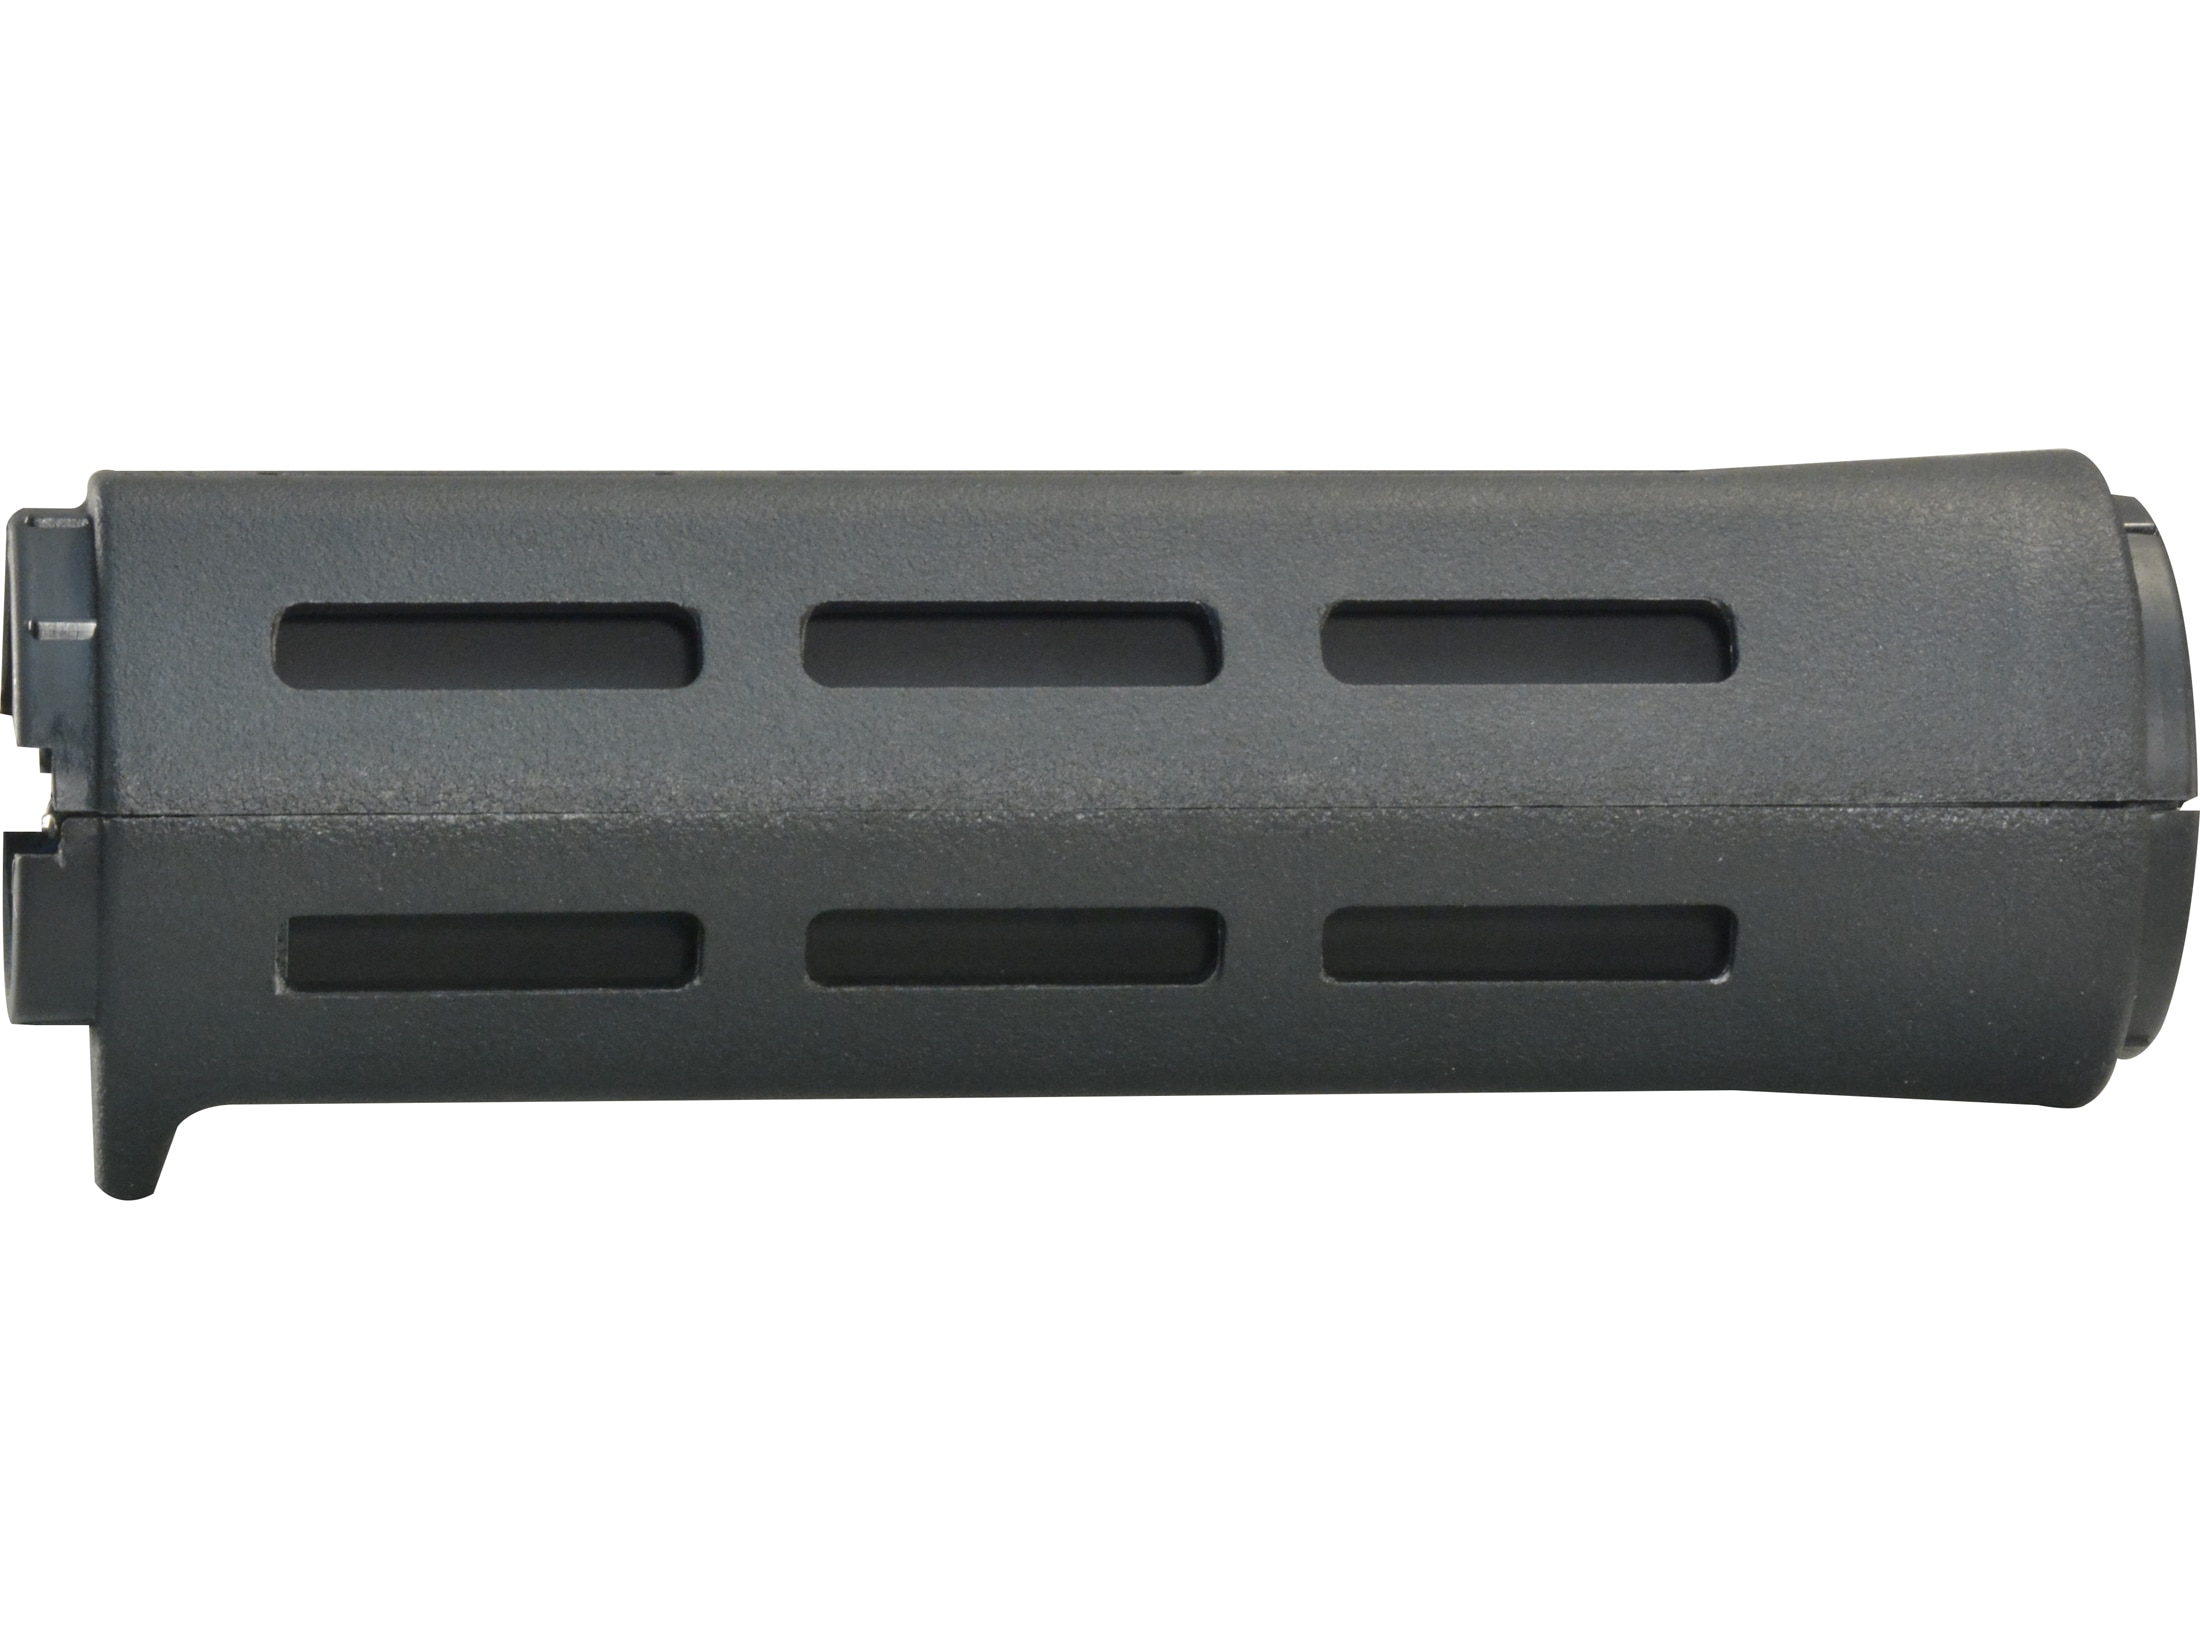 B5 Systems Handguard AR-15 M-LOK Carbine Length Polymer Flat Dark